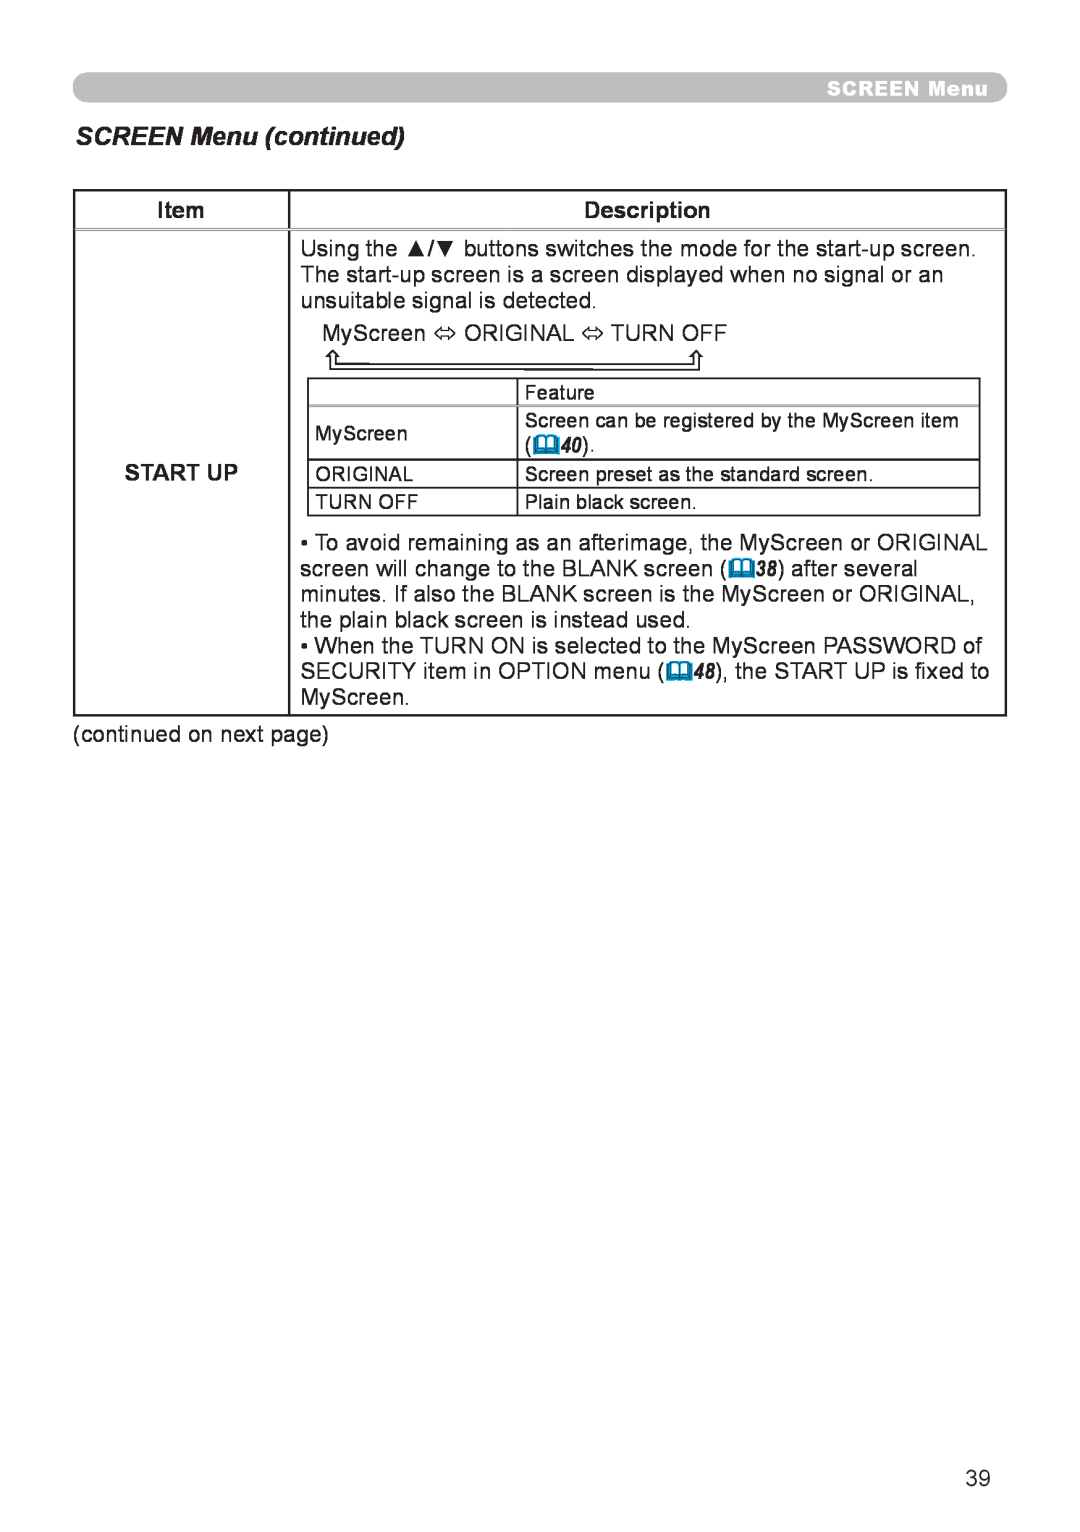 Planar PR9020 user manual SCREEN Menu continued, Description, Start Up 